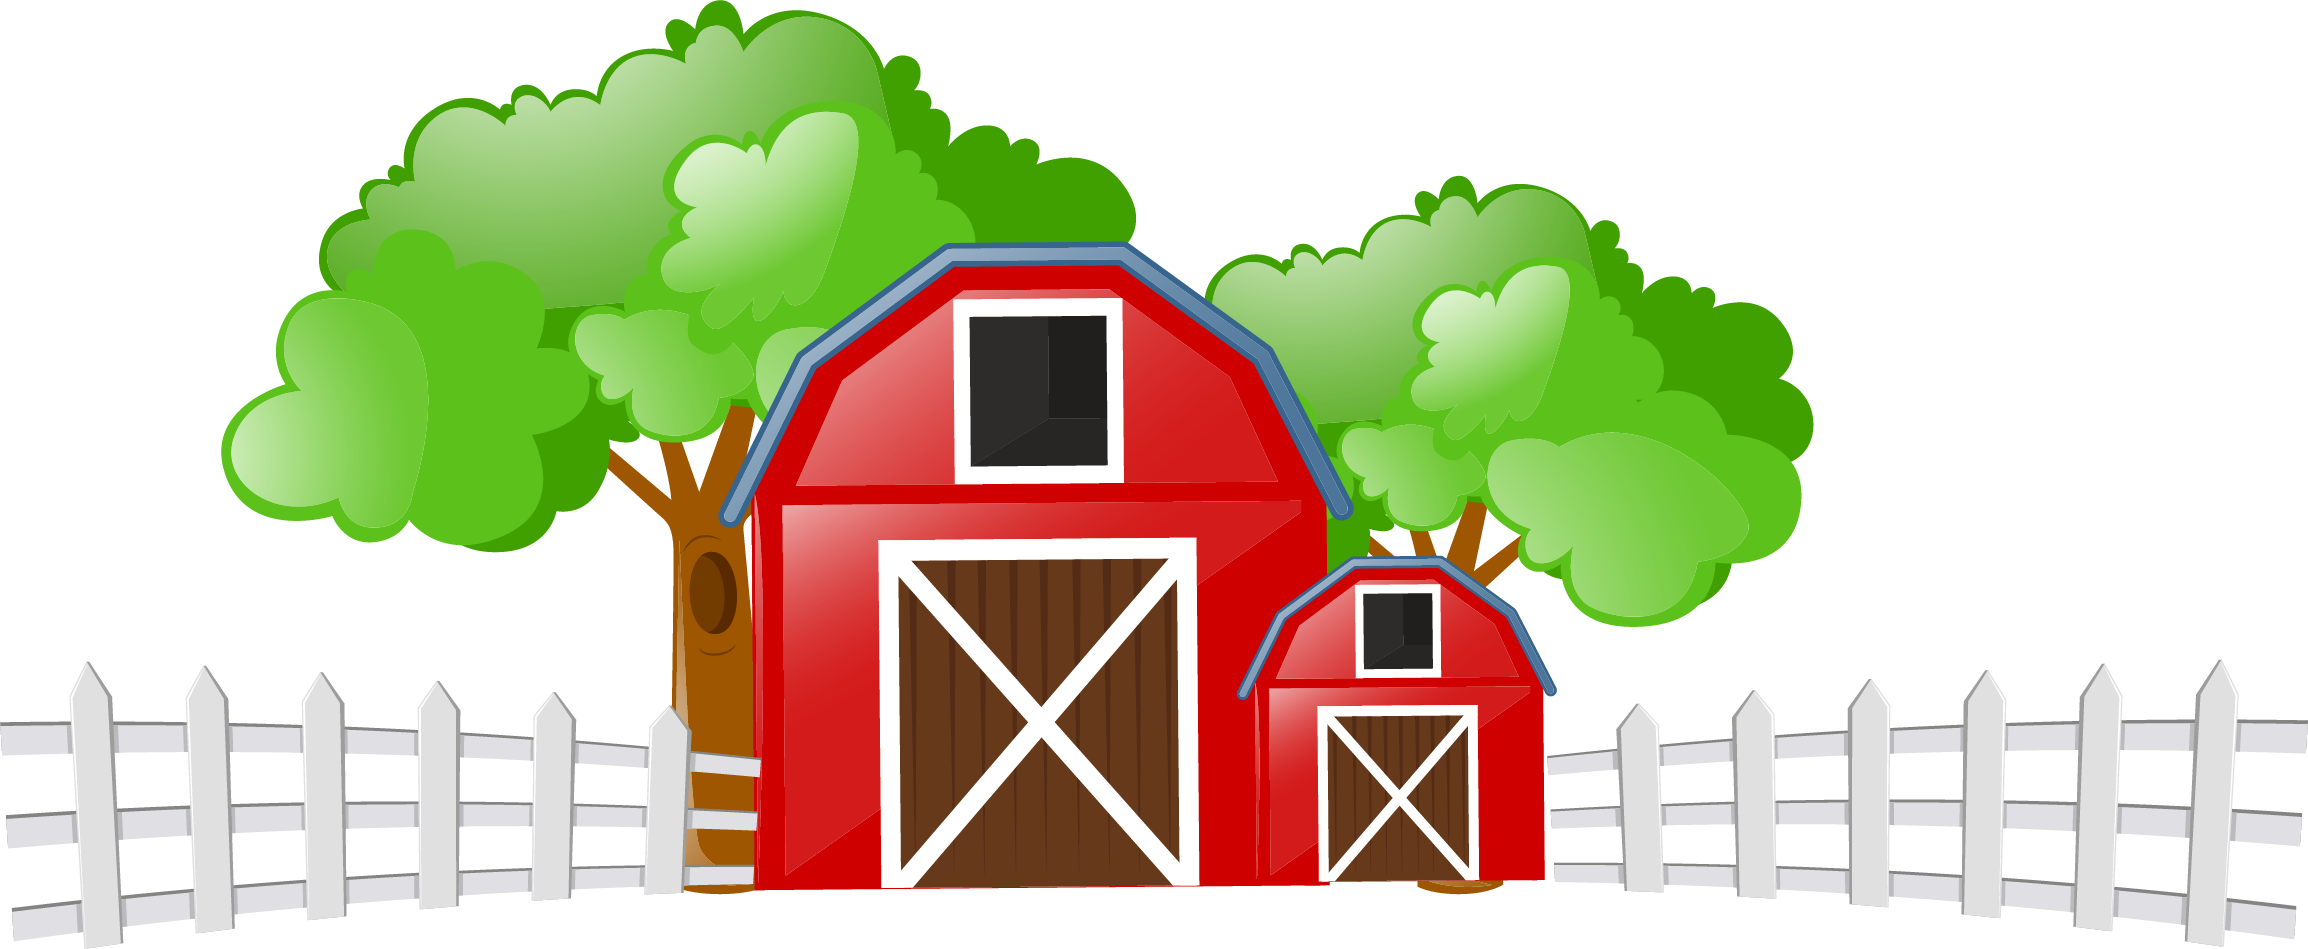 Agriculture clipart cartoon. Cattle farm livestock field